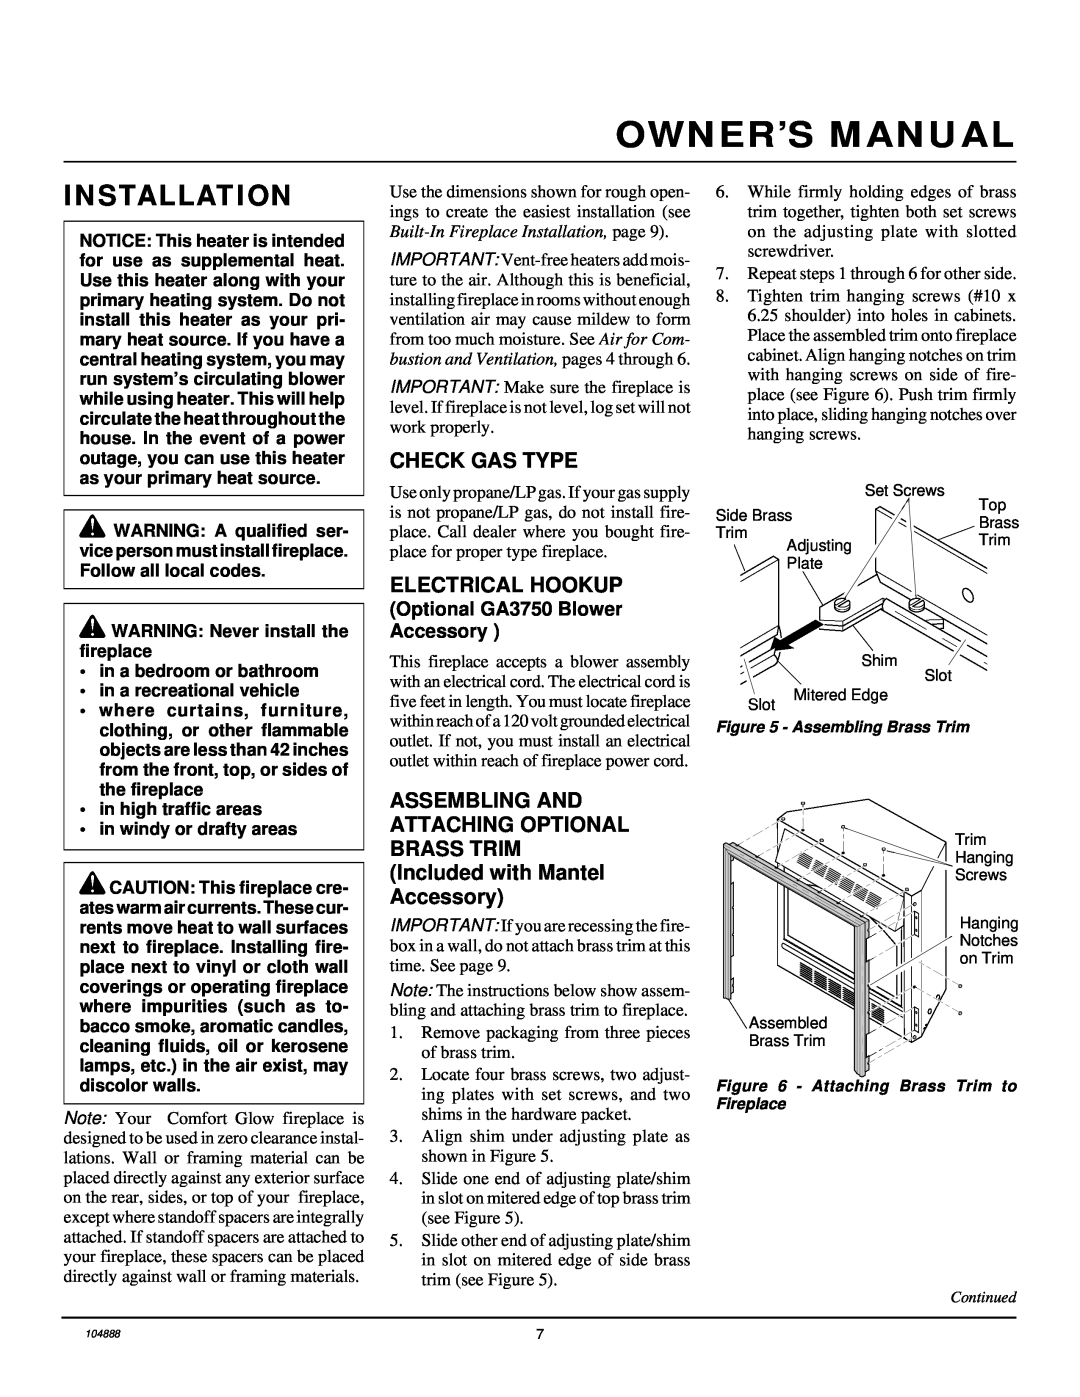 Desa LFP33PR installation manual Installation, Check Gas Type, Electrical Hookup 